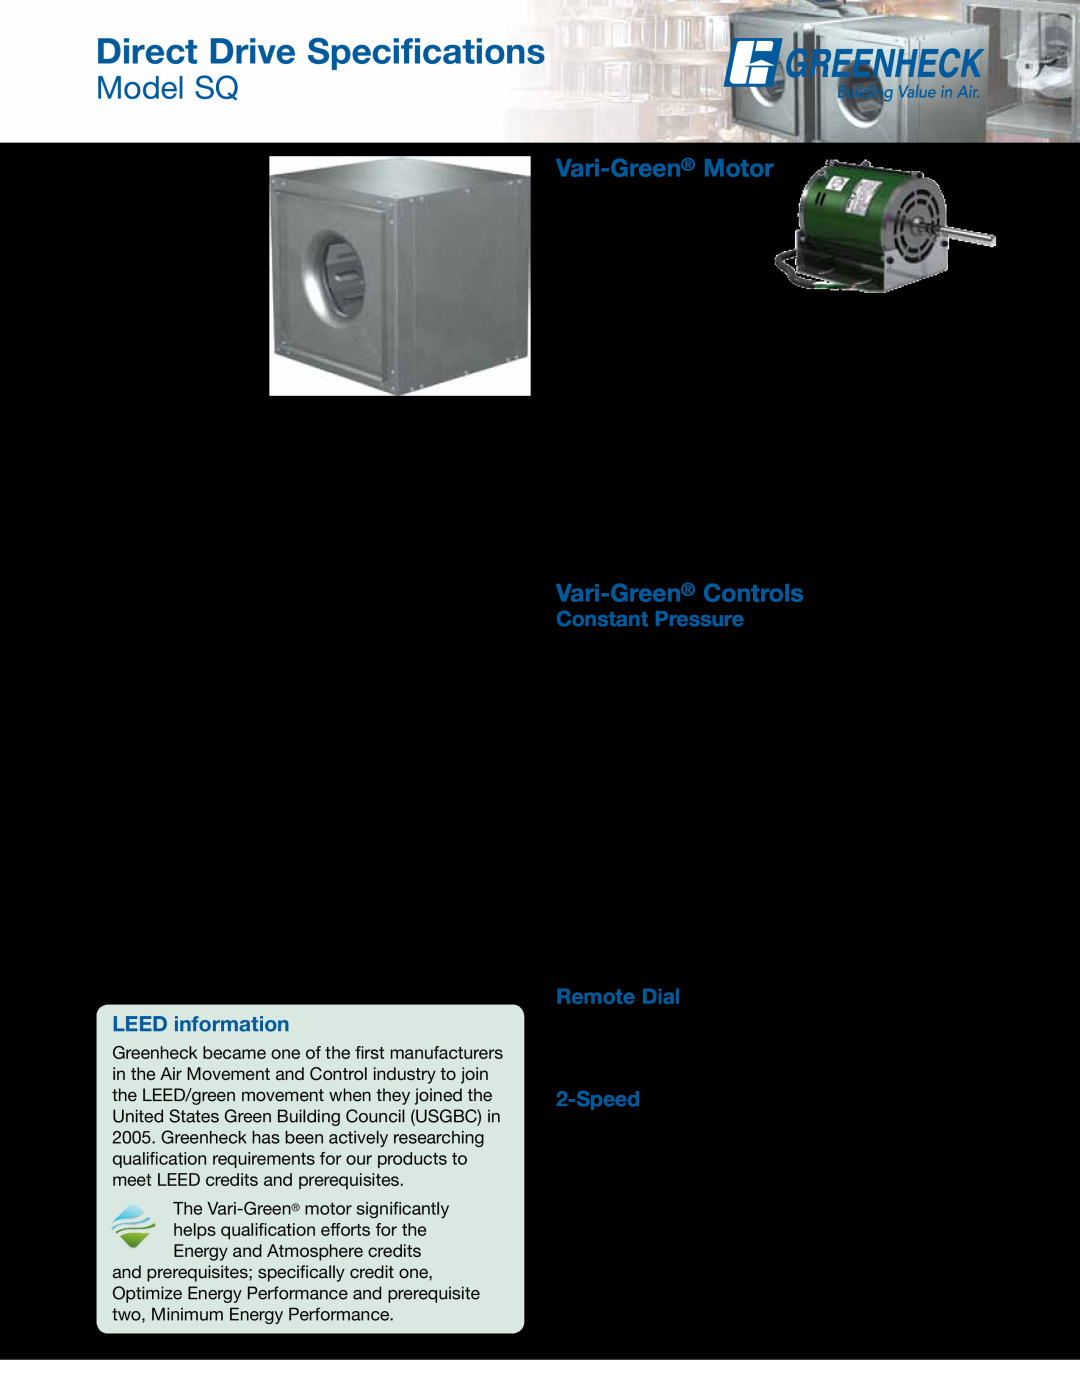 Greenheck Fan SQ/BSQ manual Direct Drive Specifications, Model SQ, Vari-Green Motor, Vari-Green Controls 